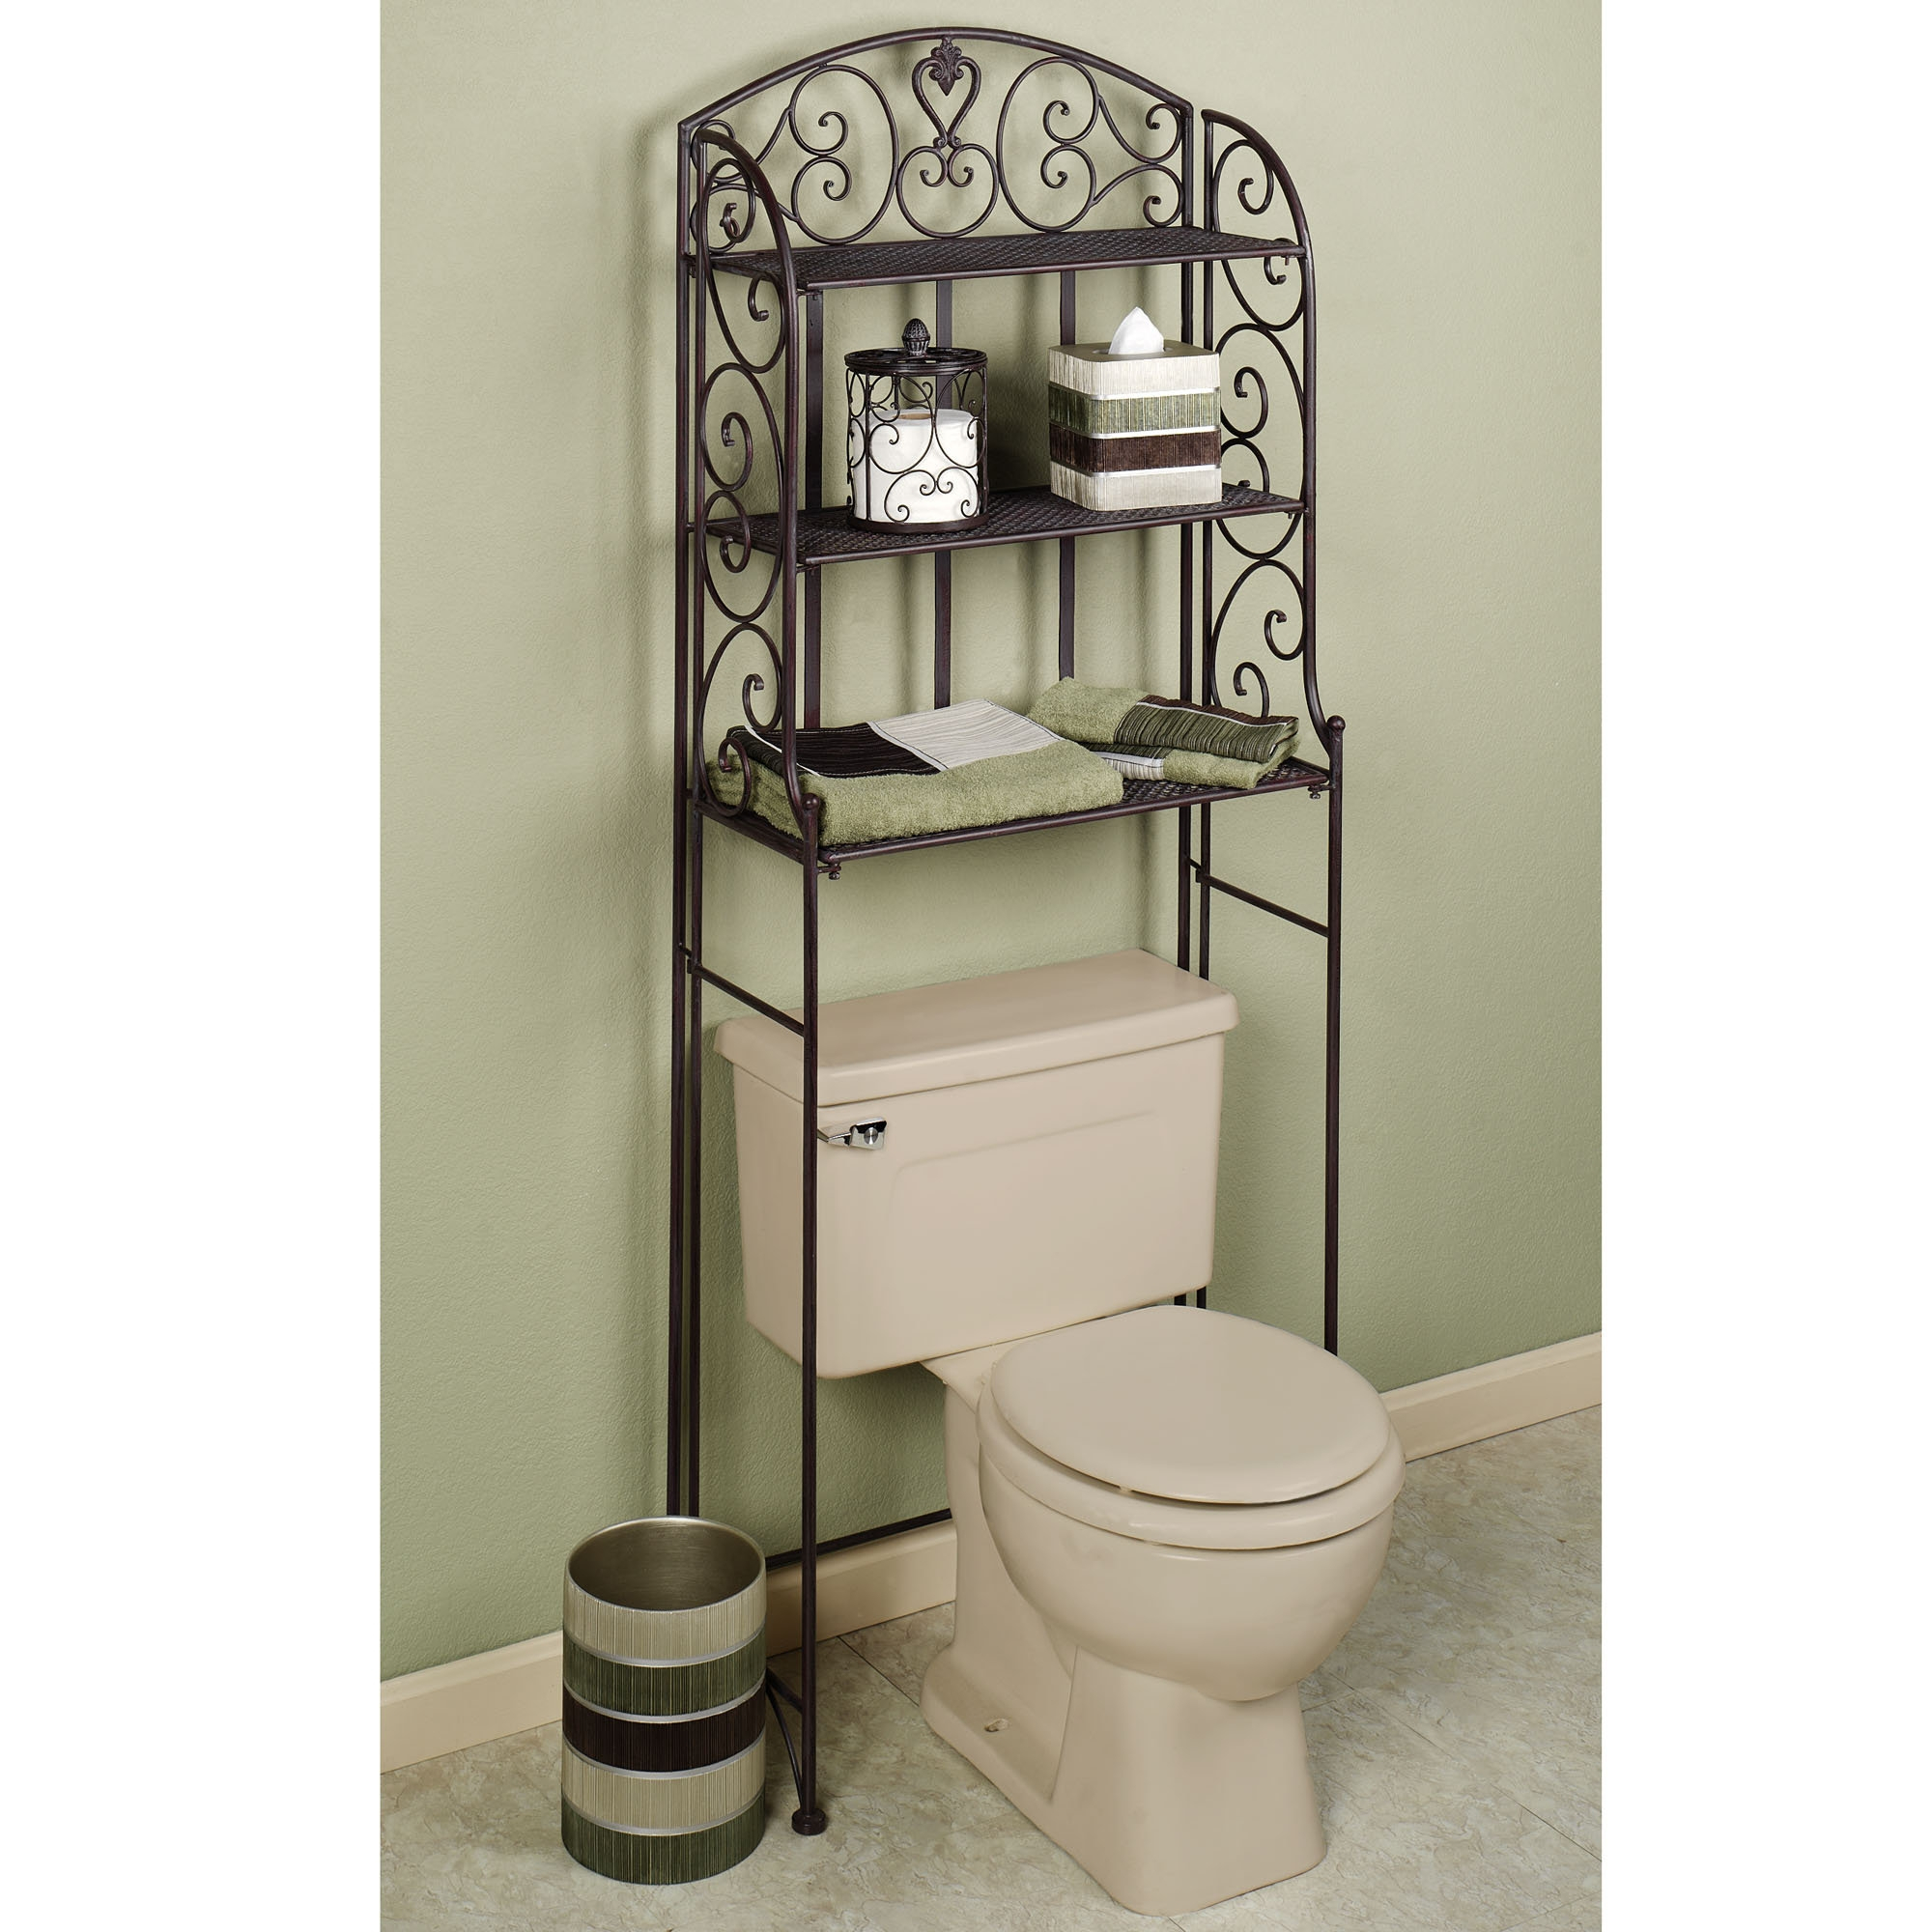 Etagere Bathroom Furniture Faucet Ideas Site